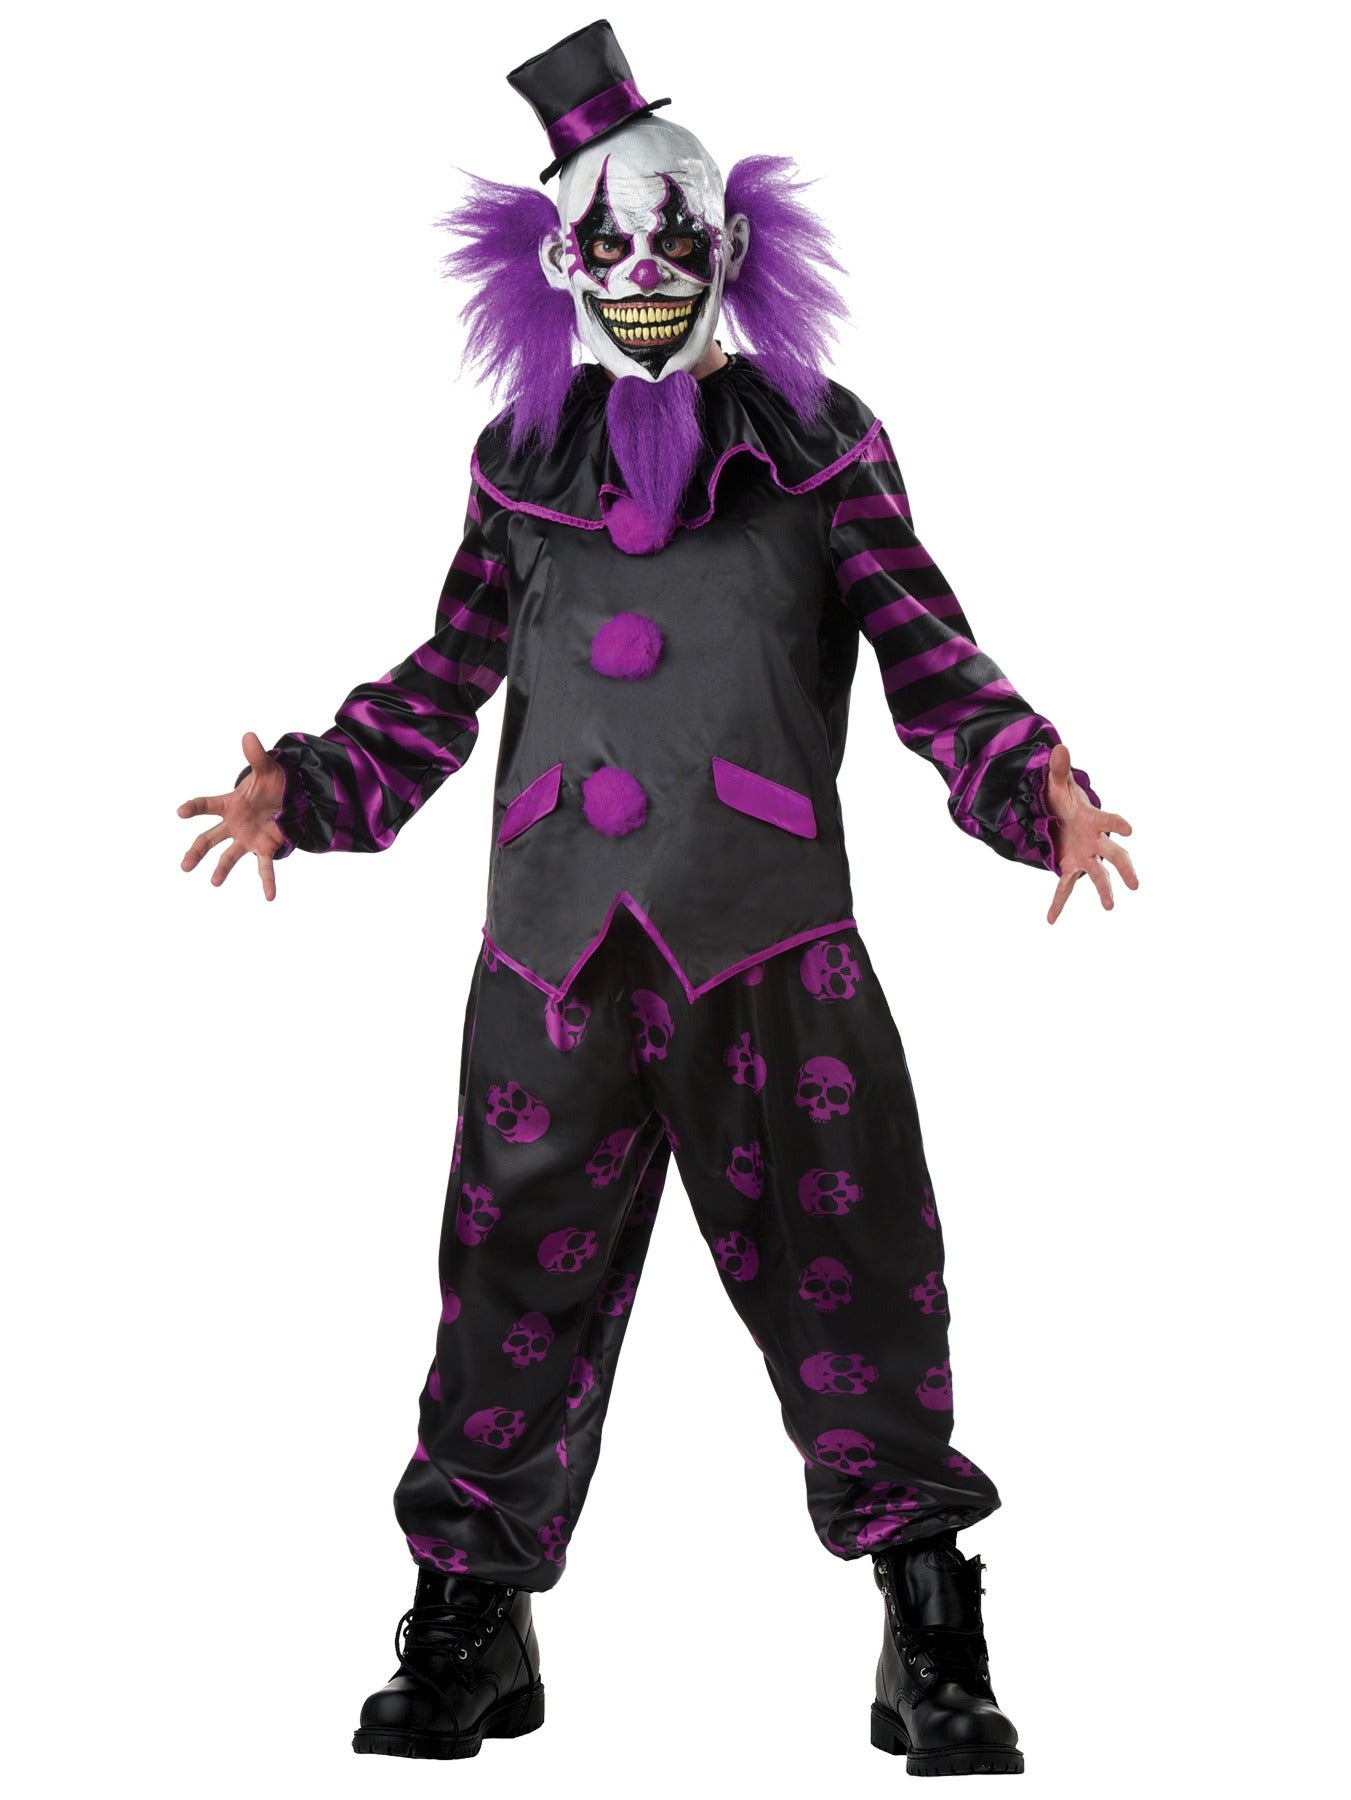 Hobbypos Bearded Clown Joker Jester Horror Creepy Evil Scary Halloween Mens Costume